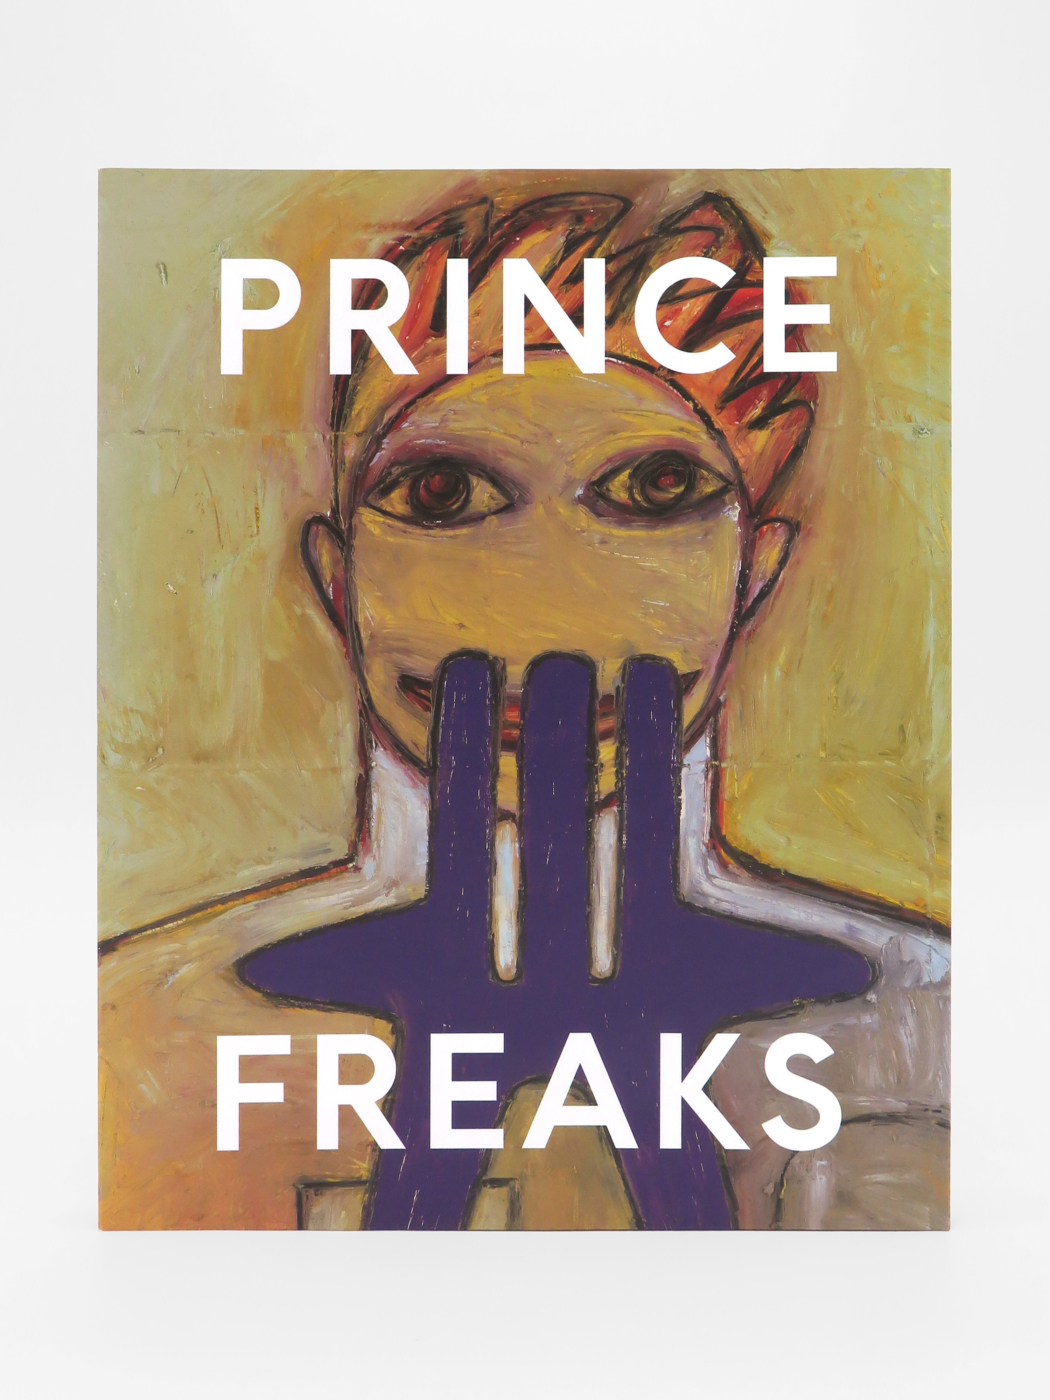 Richard Prince, Freaks